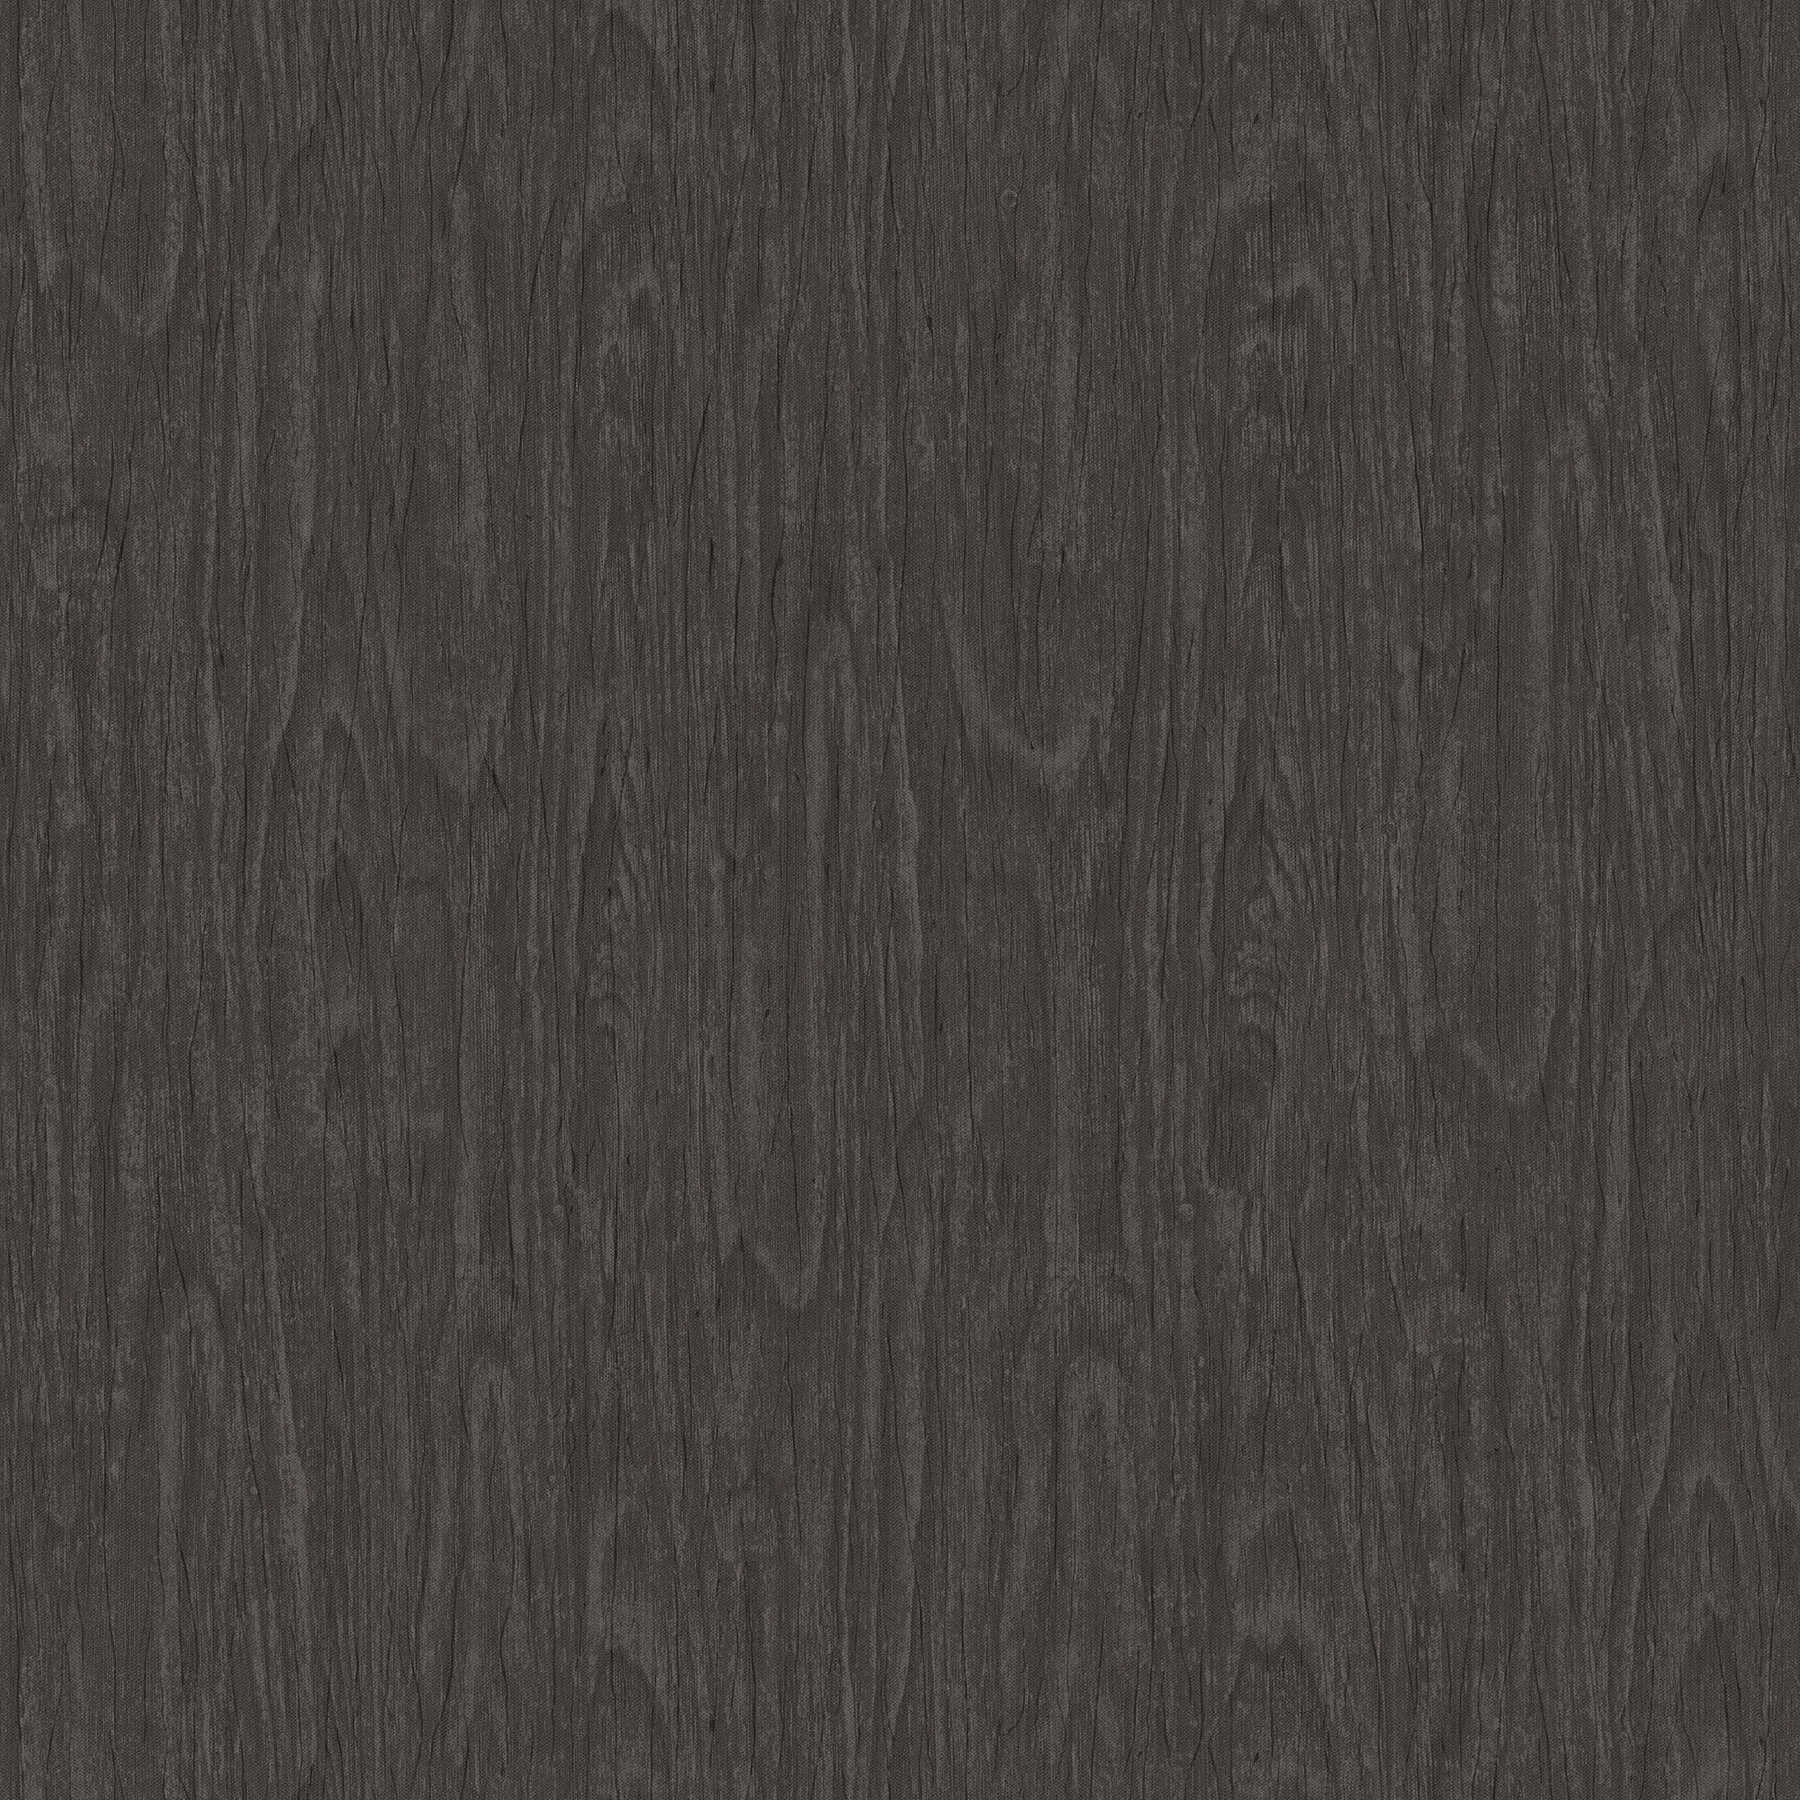         VERSACE Home wallpaper realistic wood look - grey, black
    